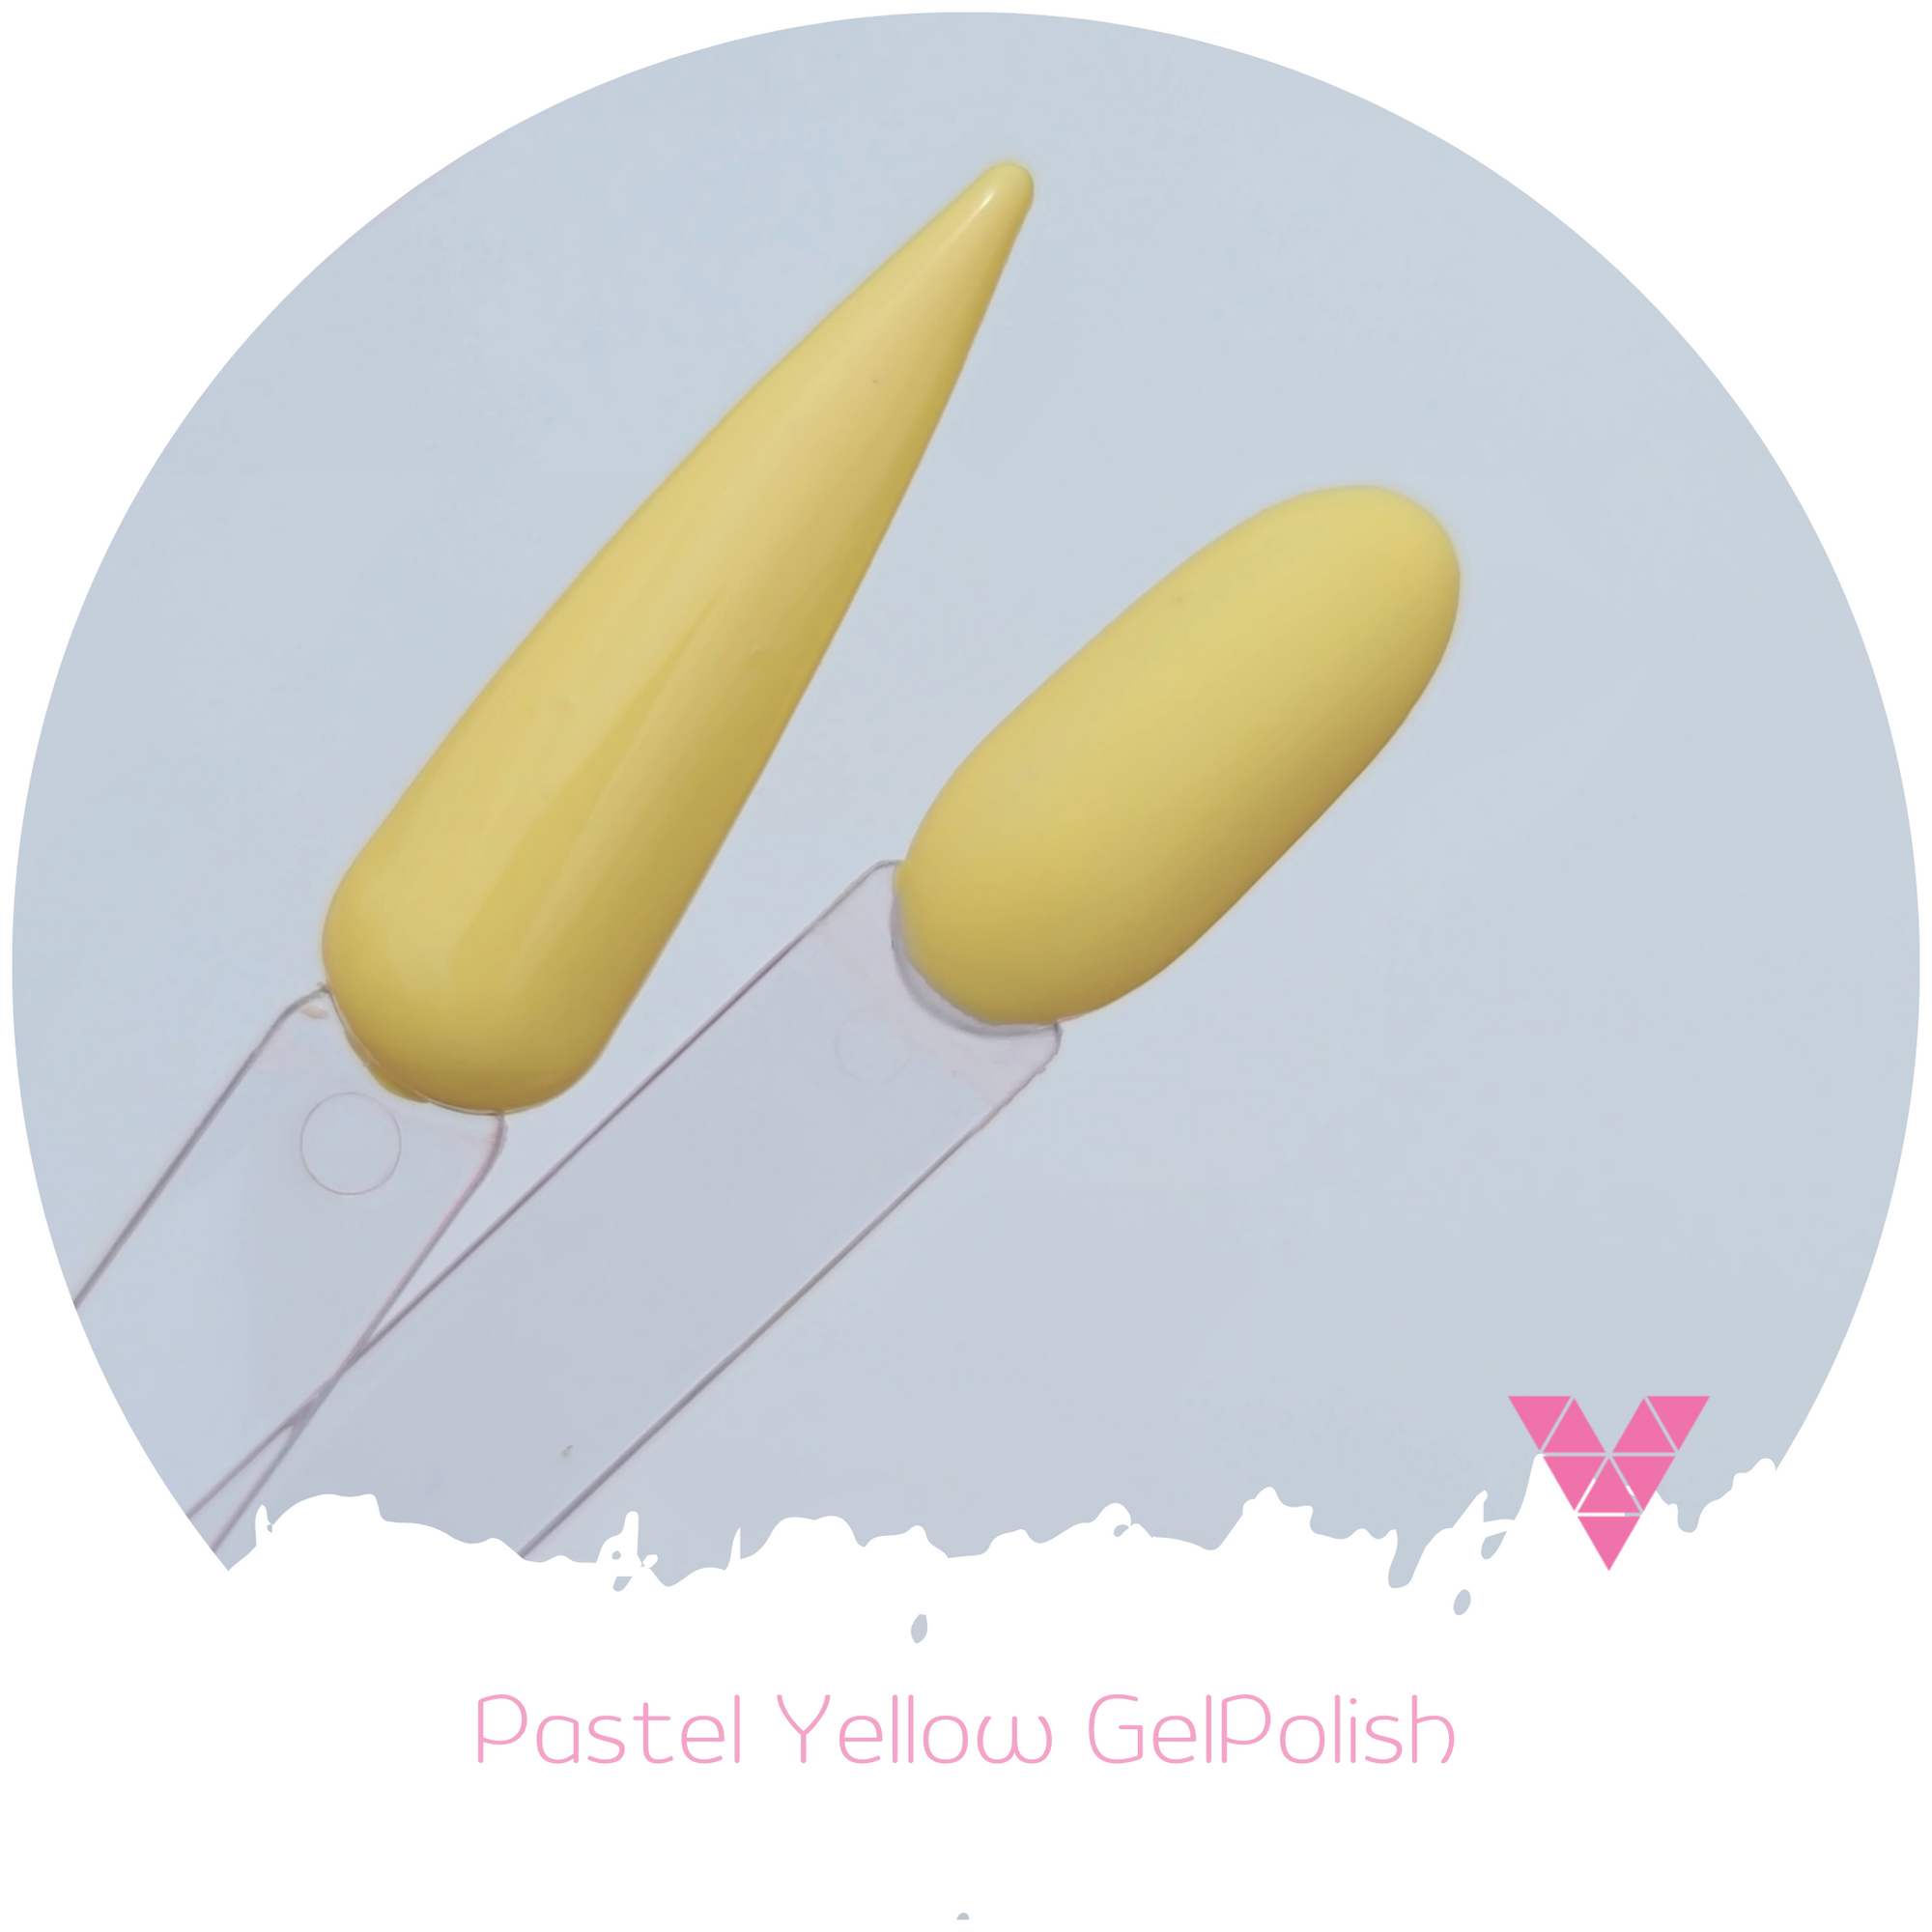 Pastel Yellow GelPolish